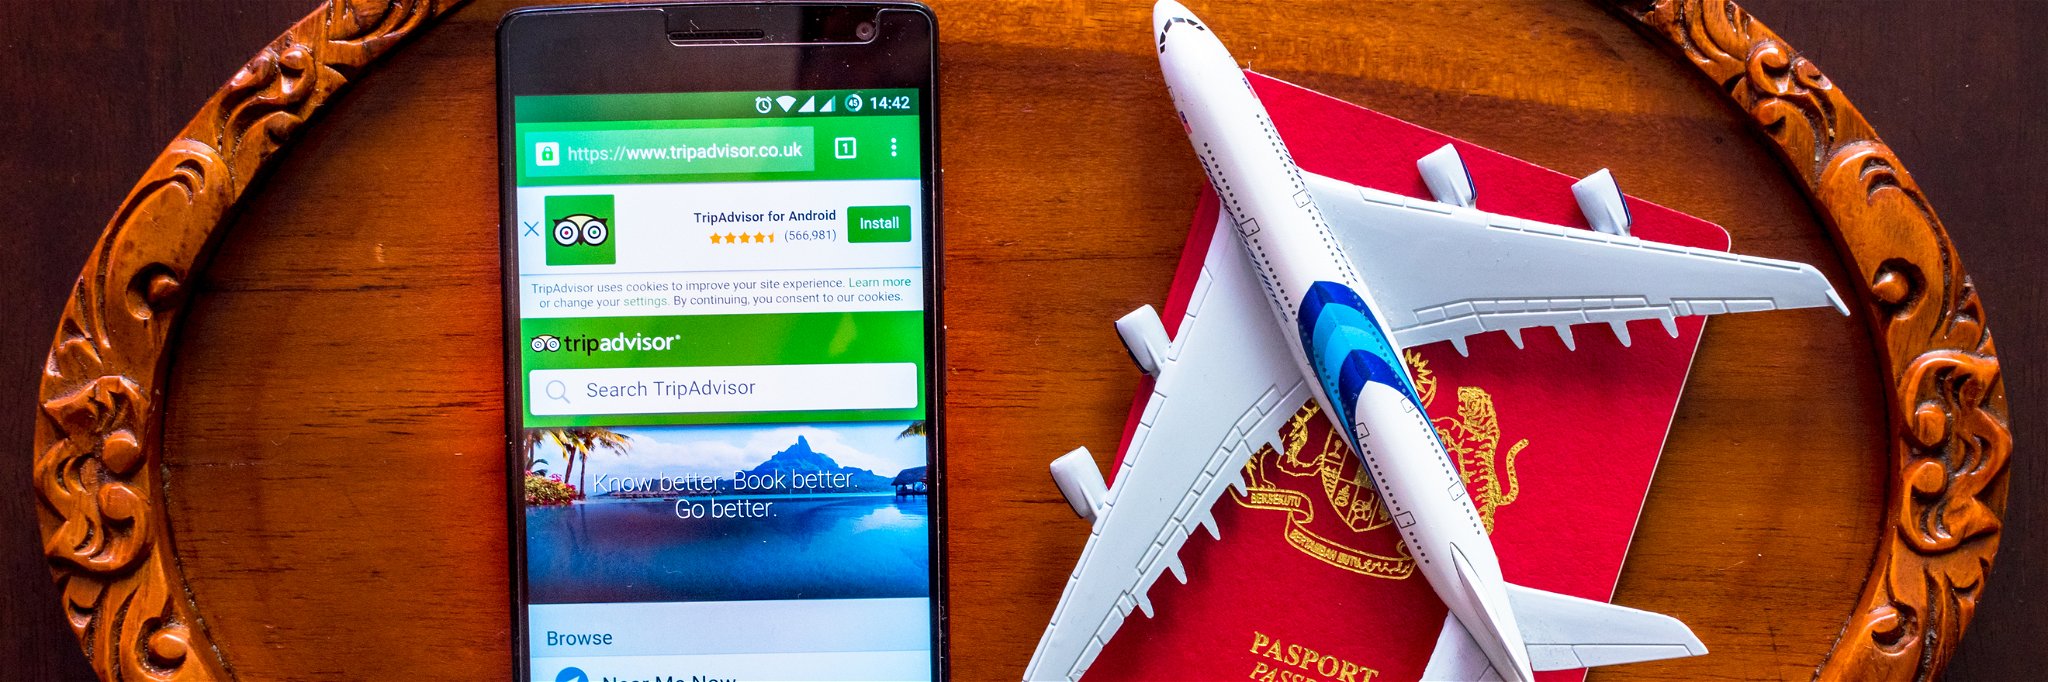 Travel Apps like Tripadvisor have made traveling so much easier